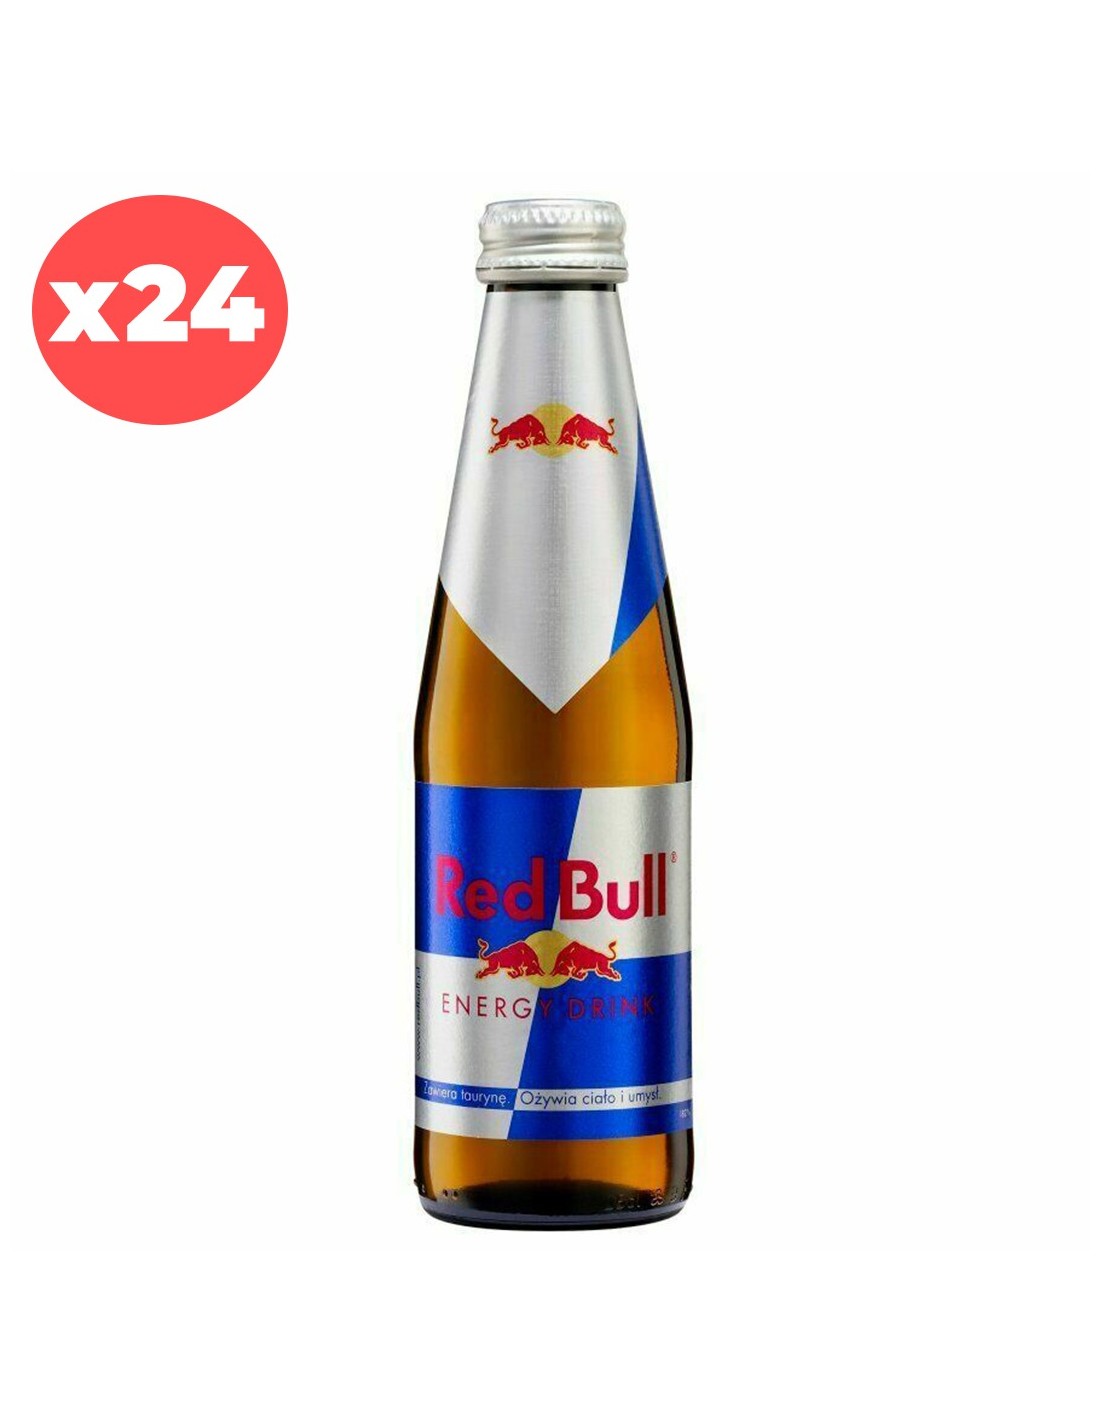 Bax 24 bucati Energizant Red Bull Glass, 0.25L alcooldiscount.ro